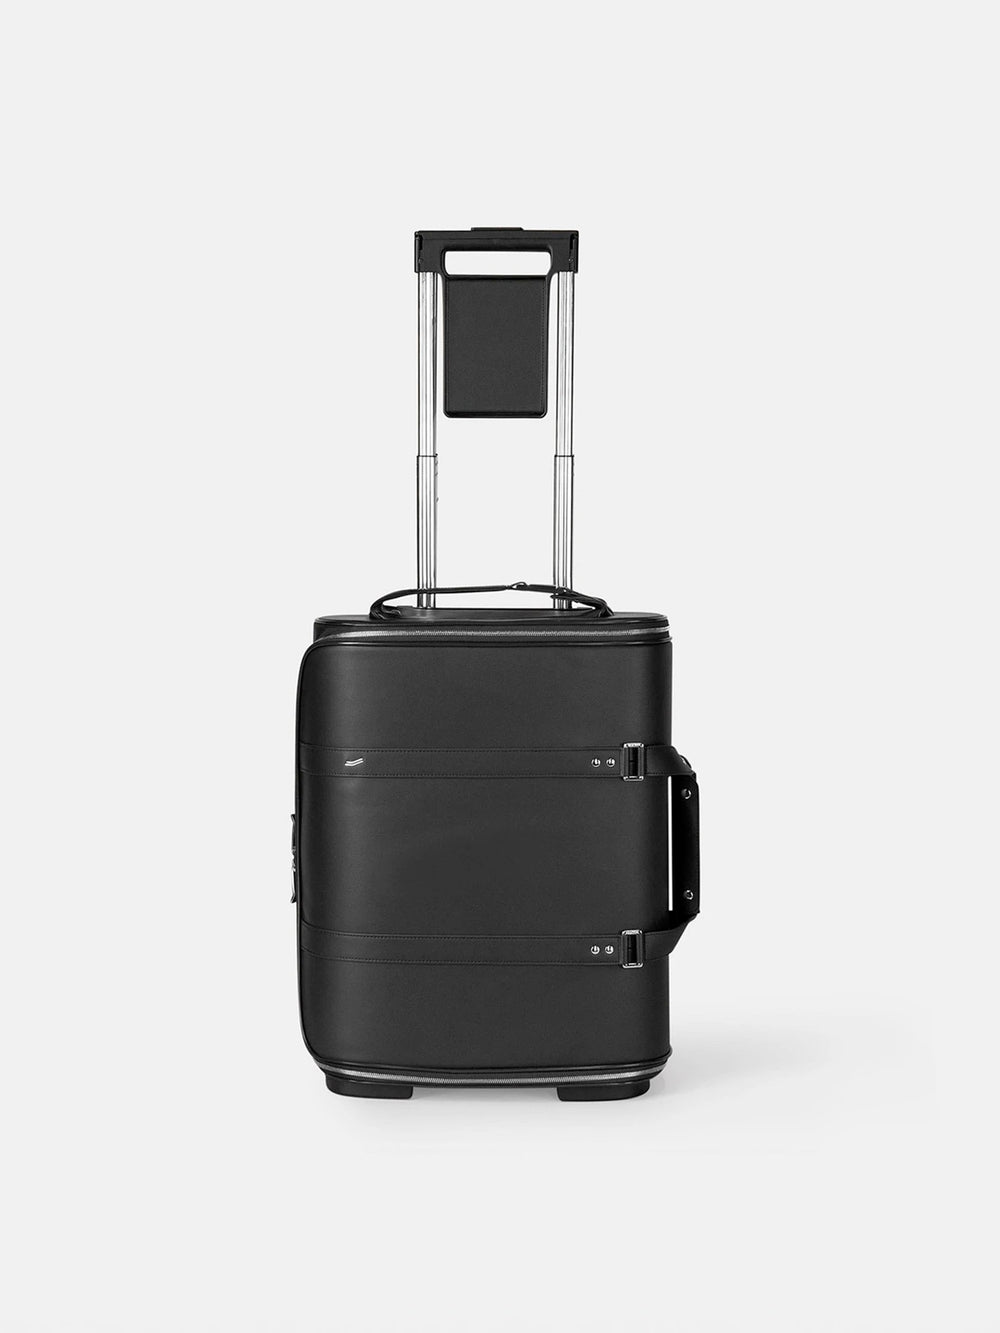 Leather luggage F38 | VOCIER Luggage & Accessories